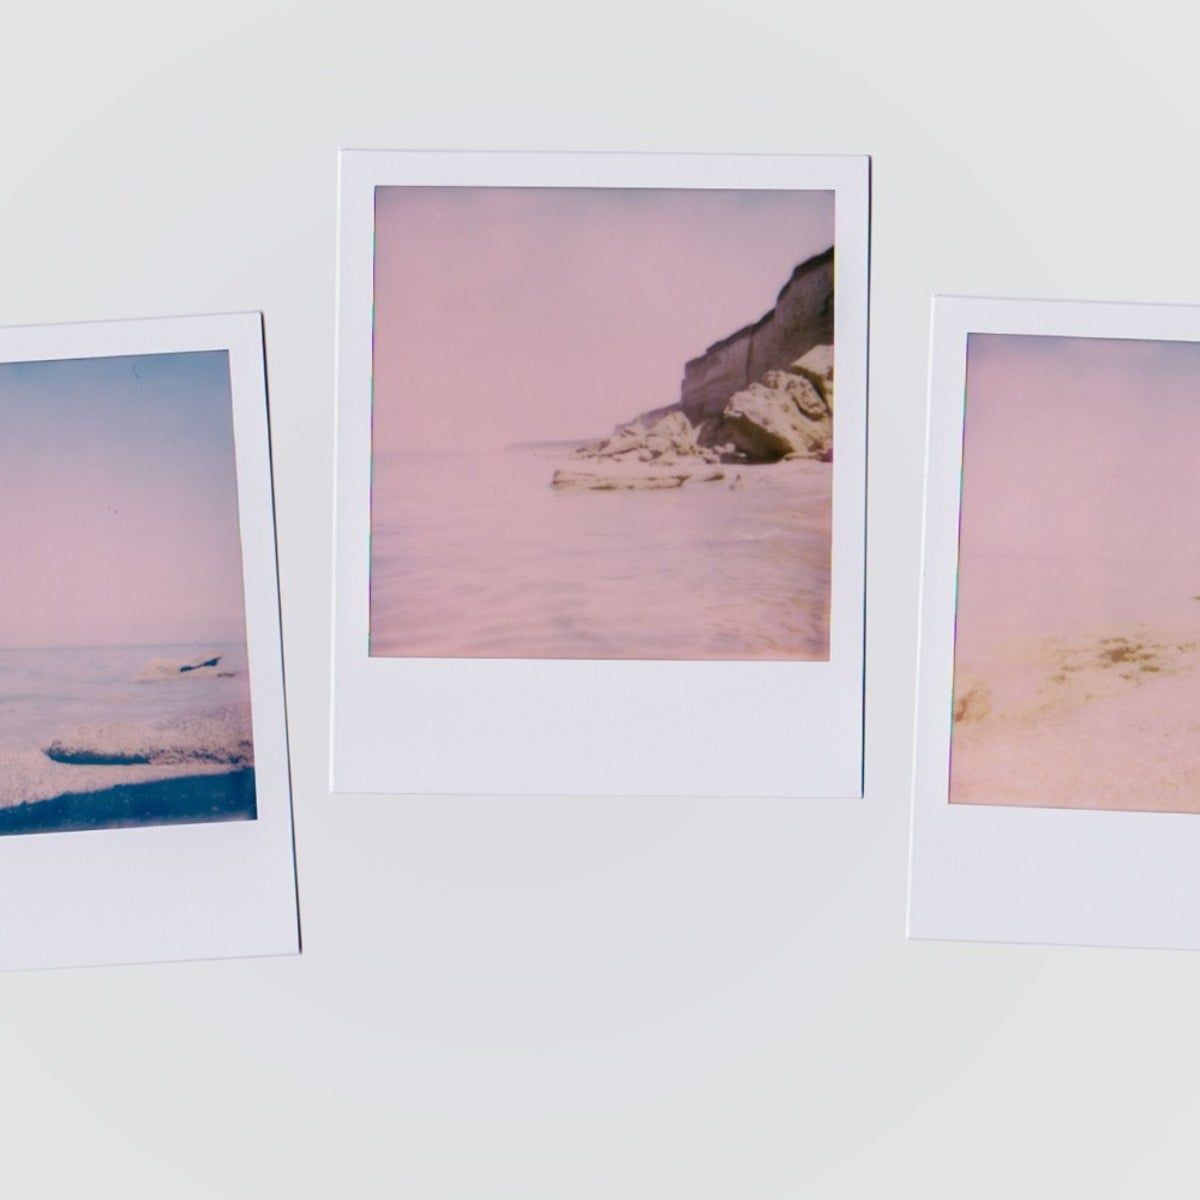 Polaroid pictures of the ocean and cliffs - Border, Polaroid